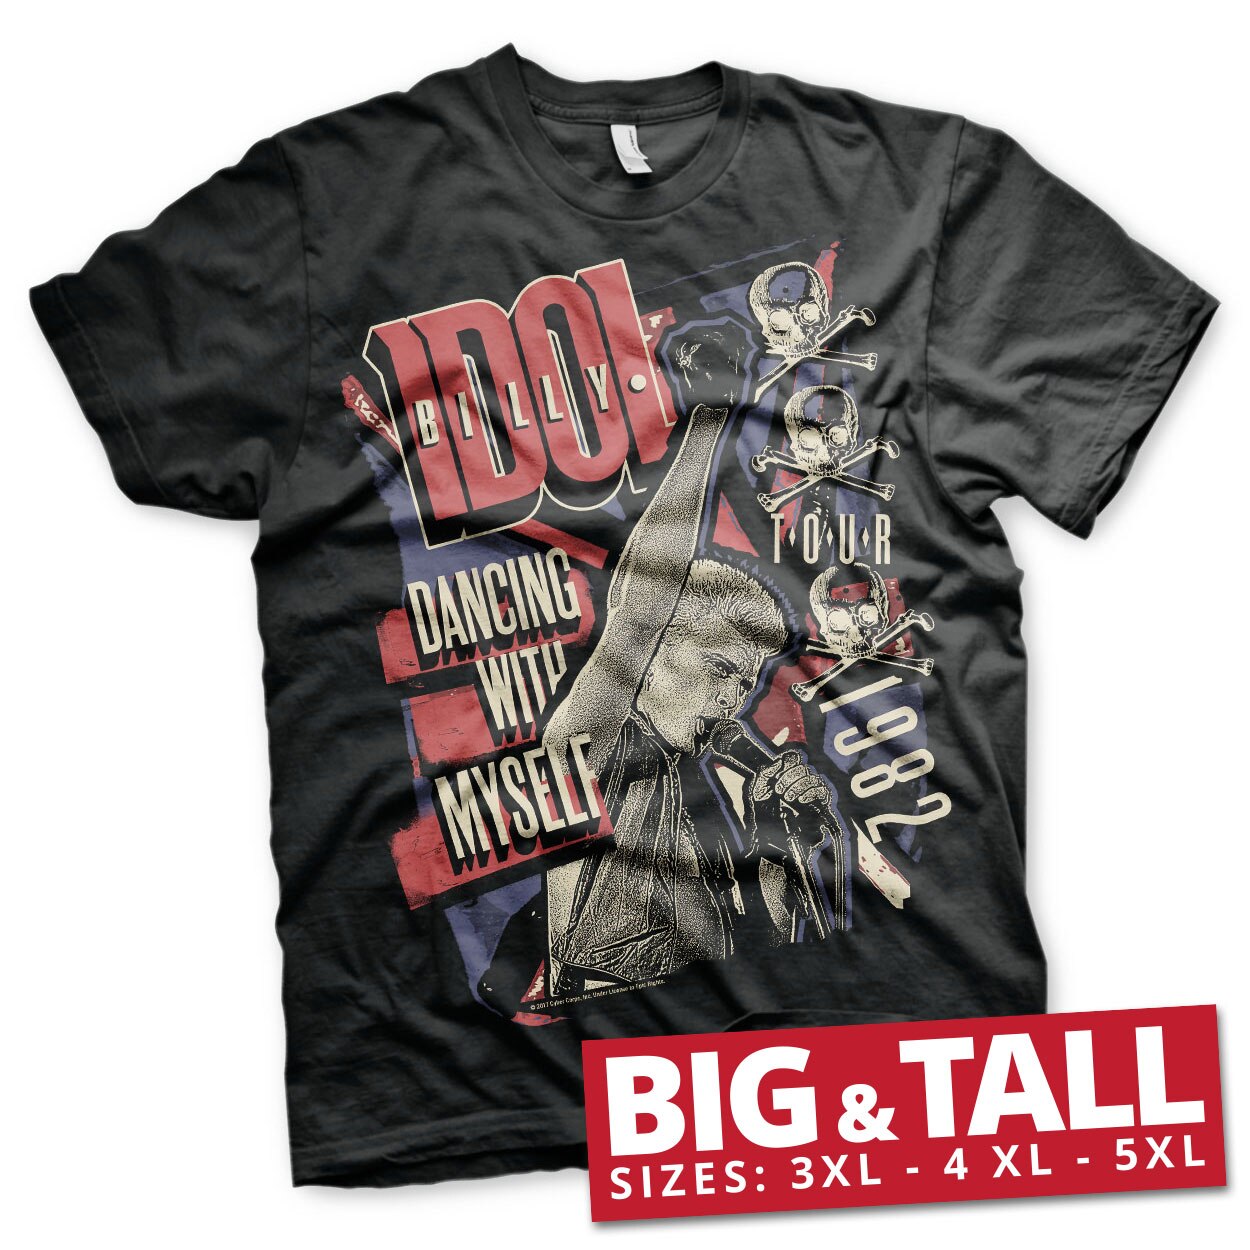 Billy Idol - Dancing With Myself Tour Big & Tall T-Shirt